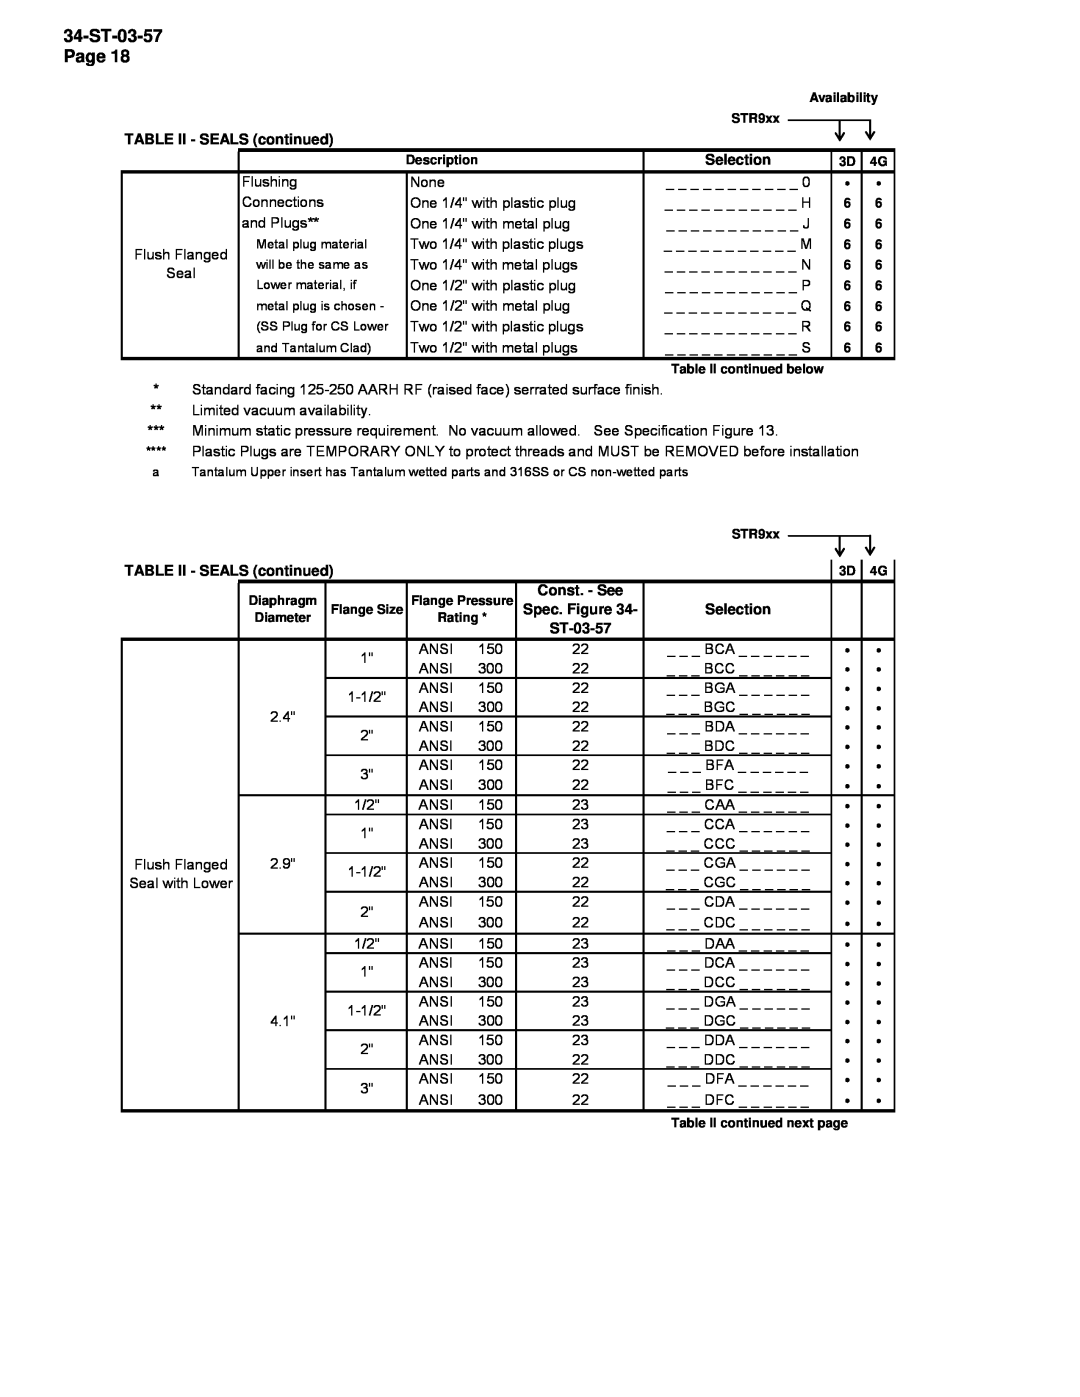 Honeywell STR93D, STR94G manual TABLE II - SEALS continued, Spec. Figure, ST-03-57 